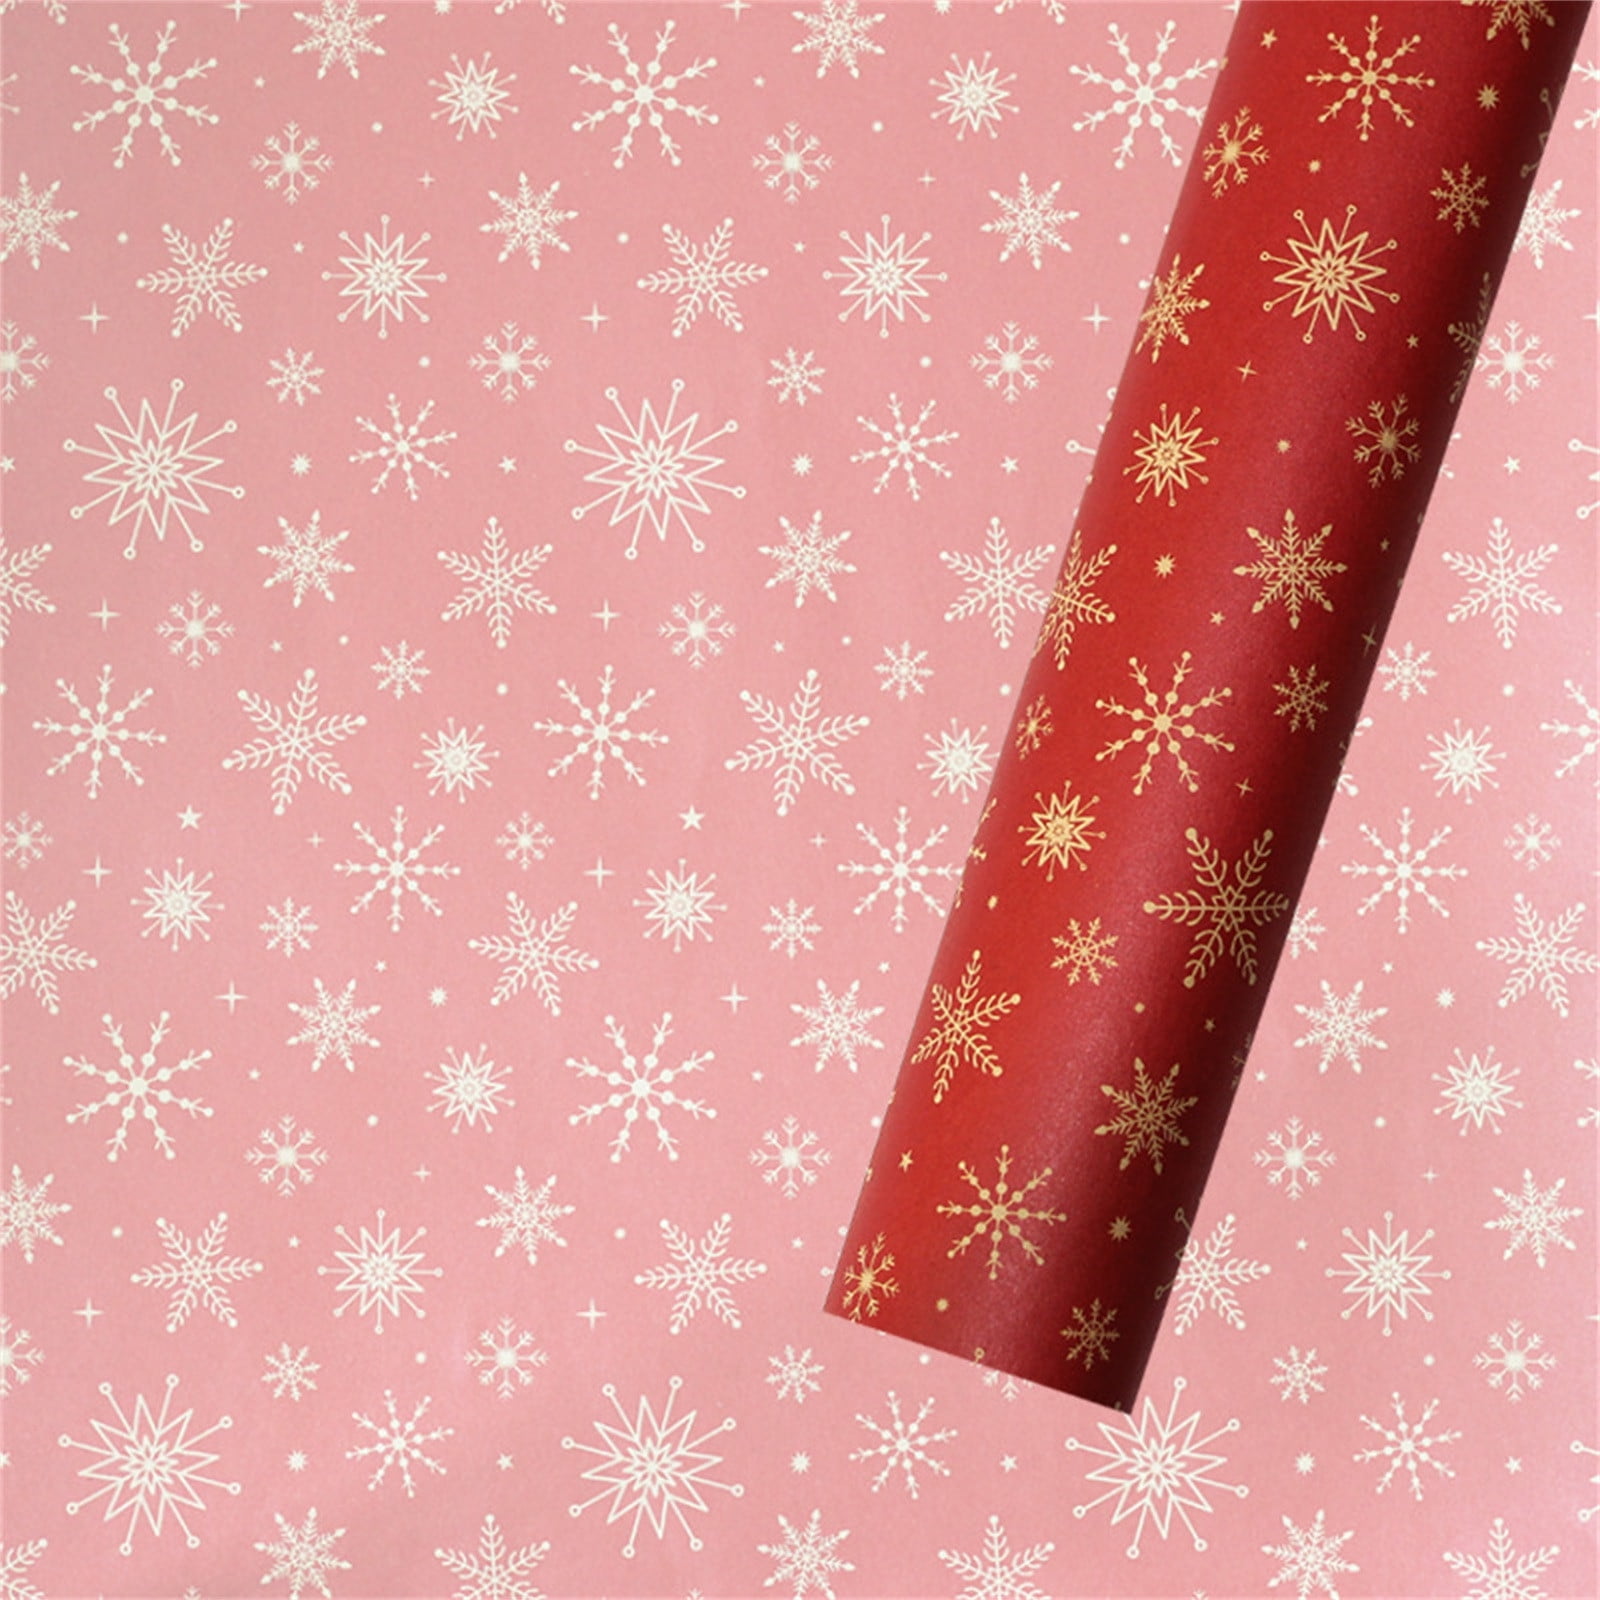 Shpwfbe Christmas Decorations Christmas Wrapping Paper Christmas